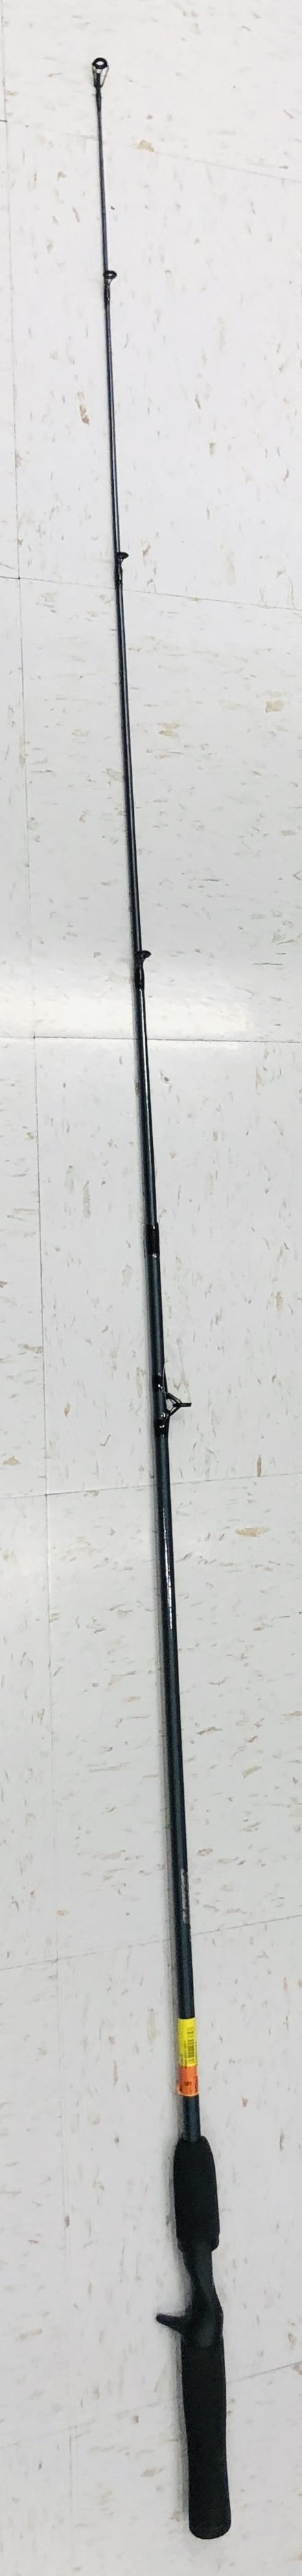 Berkley Shakespeare Durango Spincast Fishing Rod